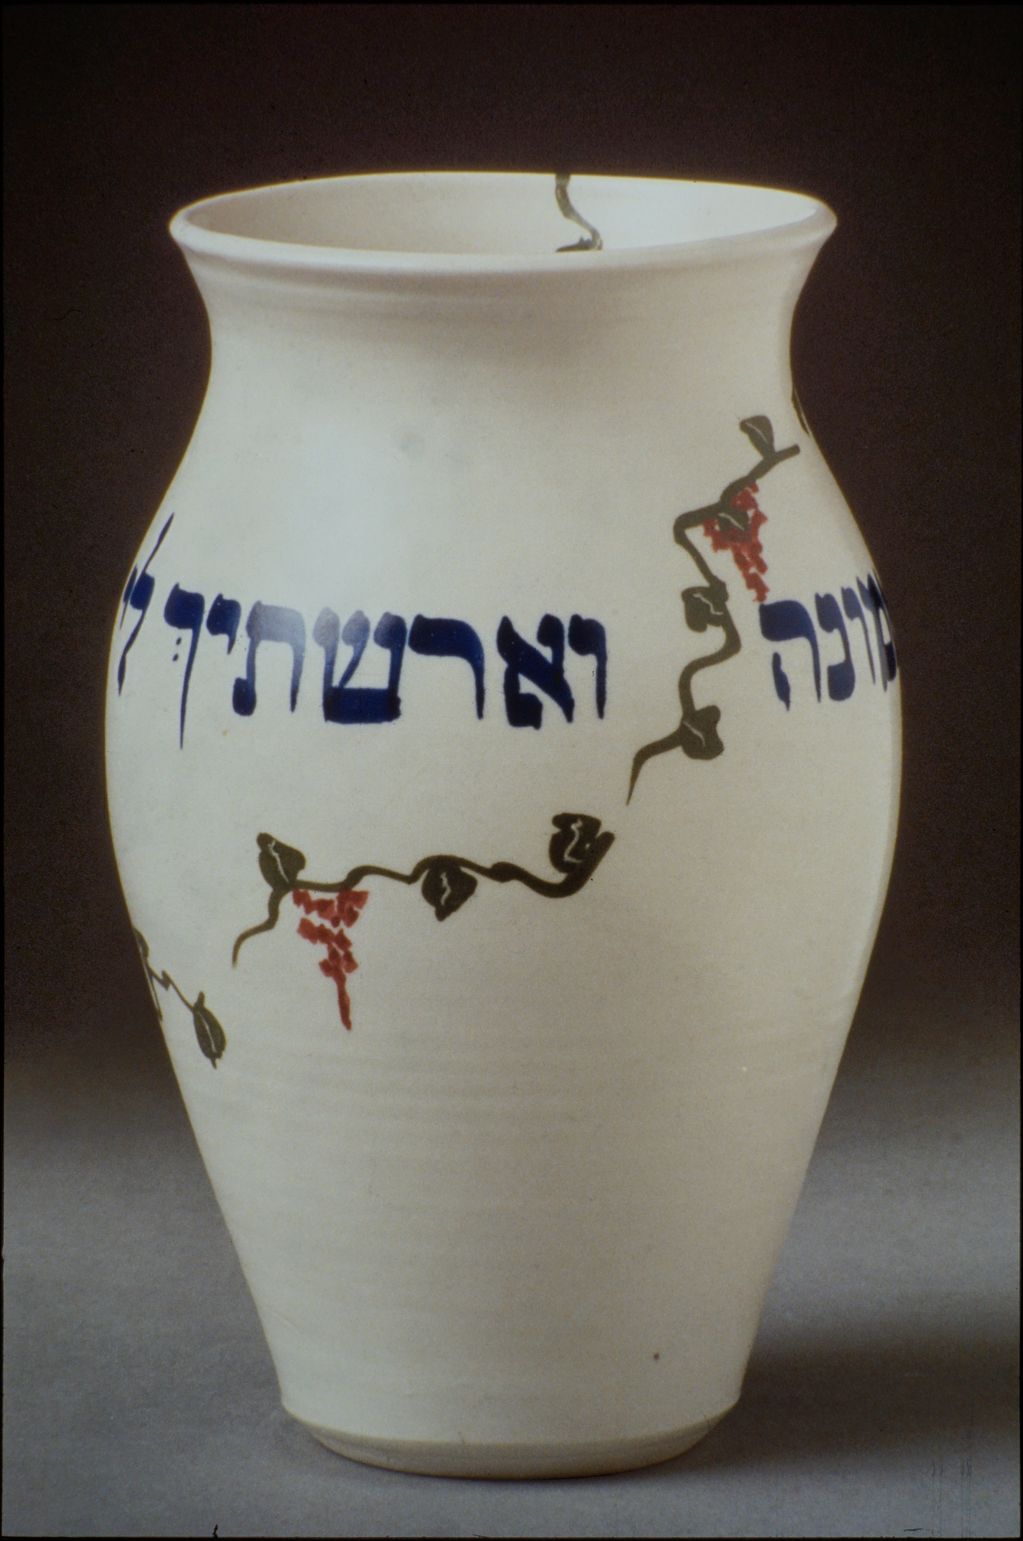 Wedding vase. I bind to you in faithfullness. Torah quote. Aniversary gift. Customizable.